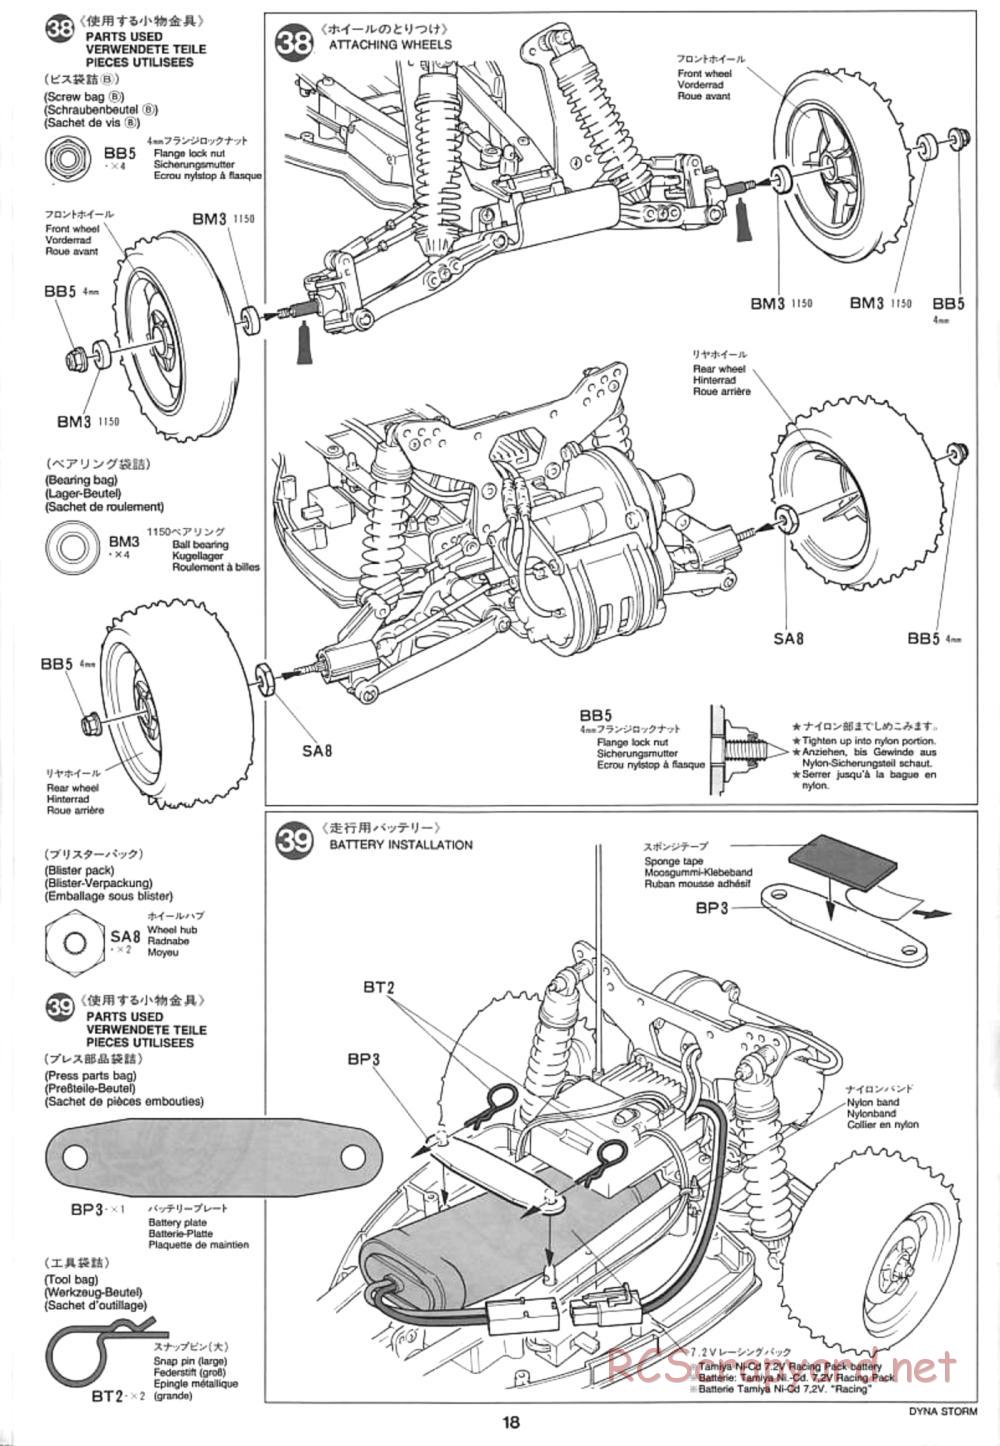 Tamiya - Dyna Storm Chassis - Manual - Page 18